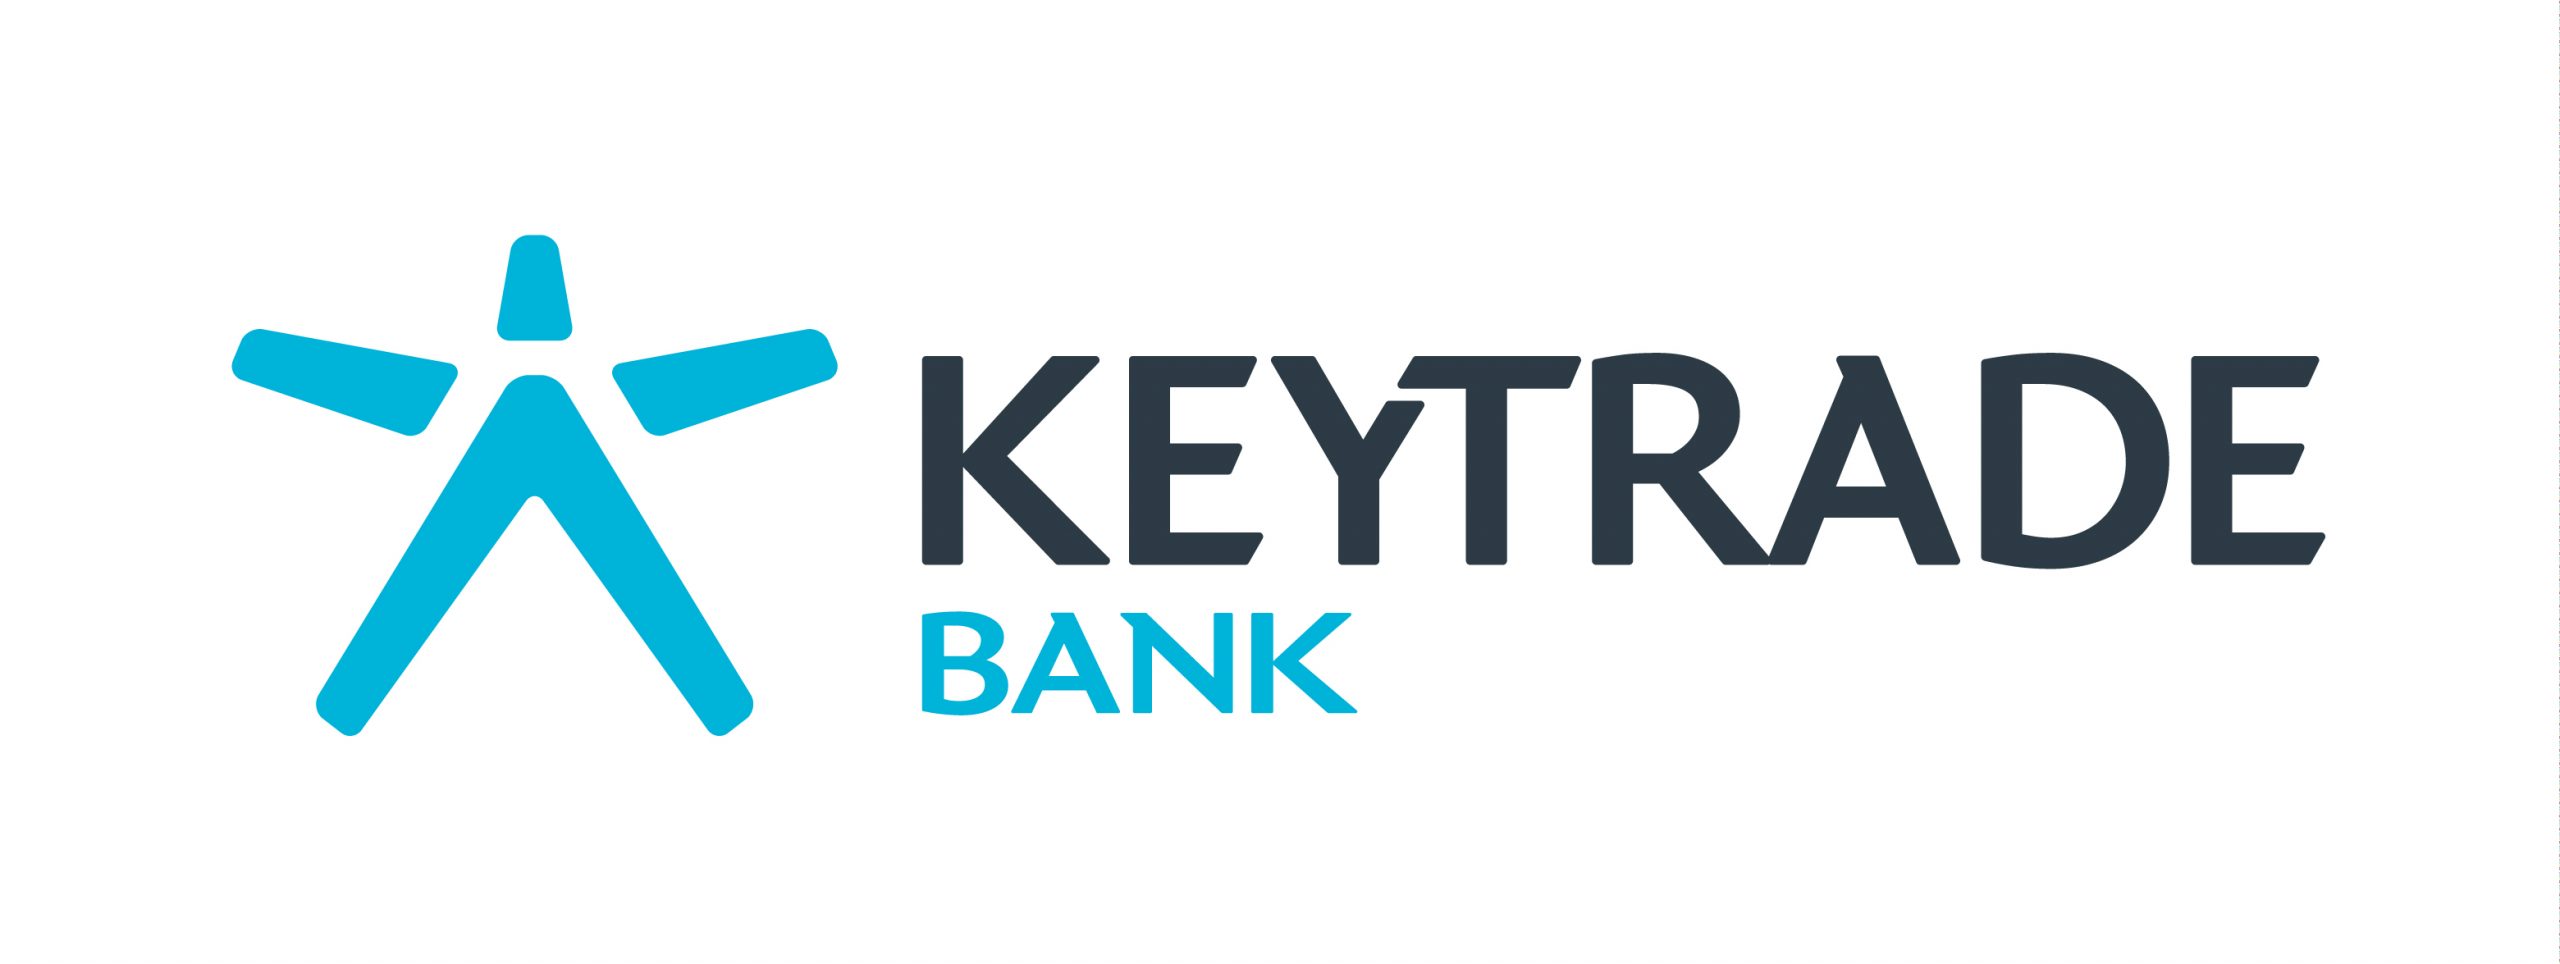 Comment contacter Keytrade service client ?